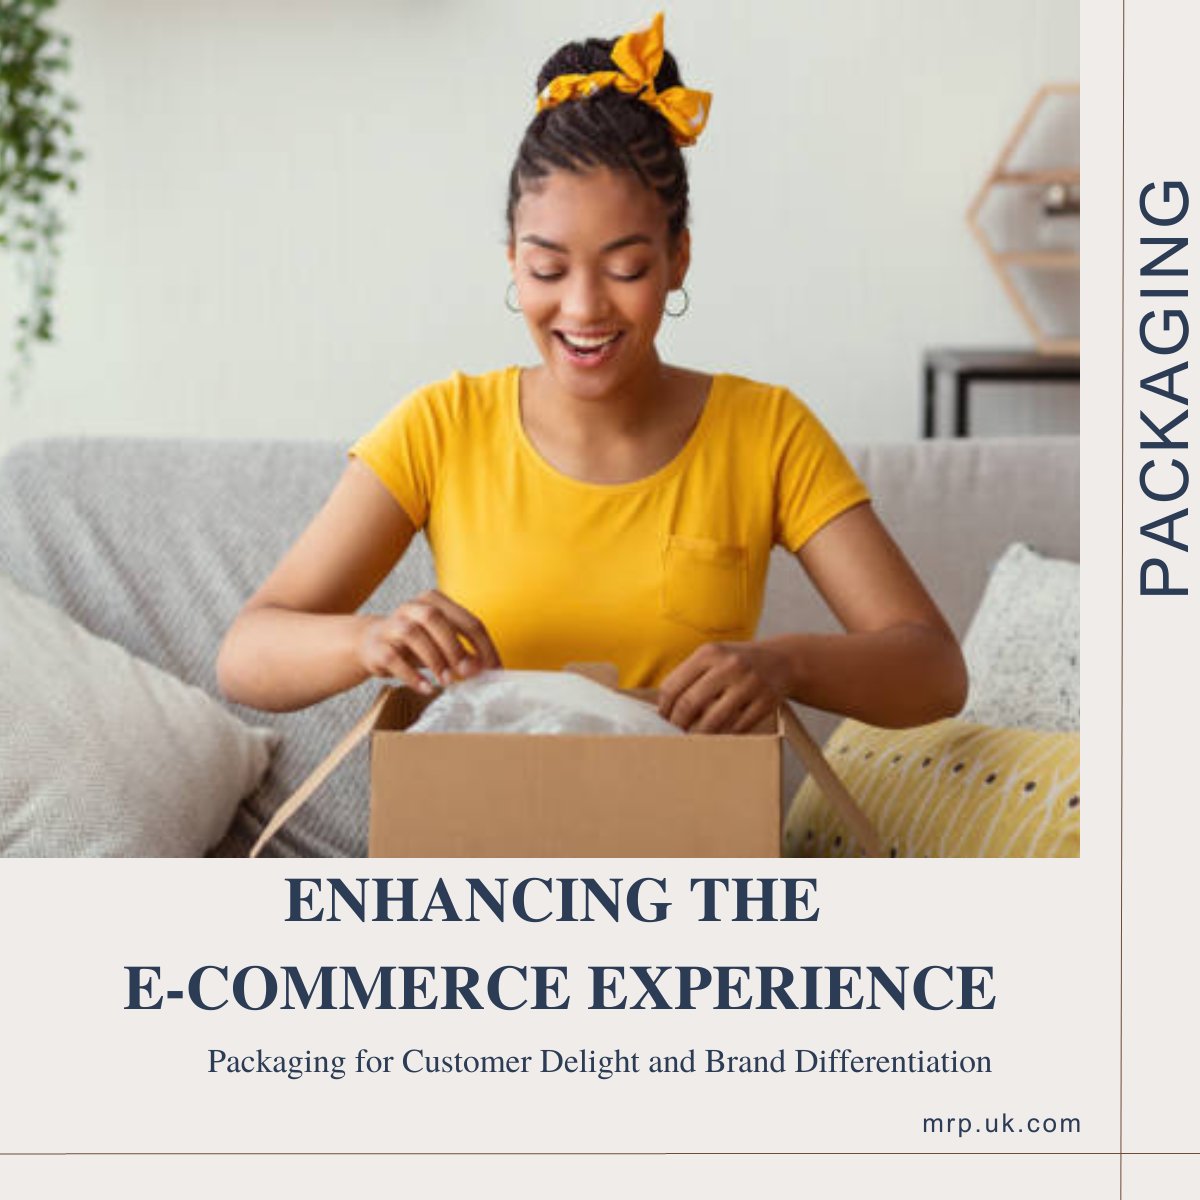 Enhancing the E-commerce experience
linkedin.com/pulse/enhancin… 
📦🌟
#ecommercebusiness #packaging #cartons #madeinengland #boxes #shippingcartons #ecommercetips